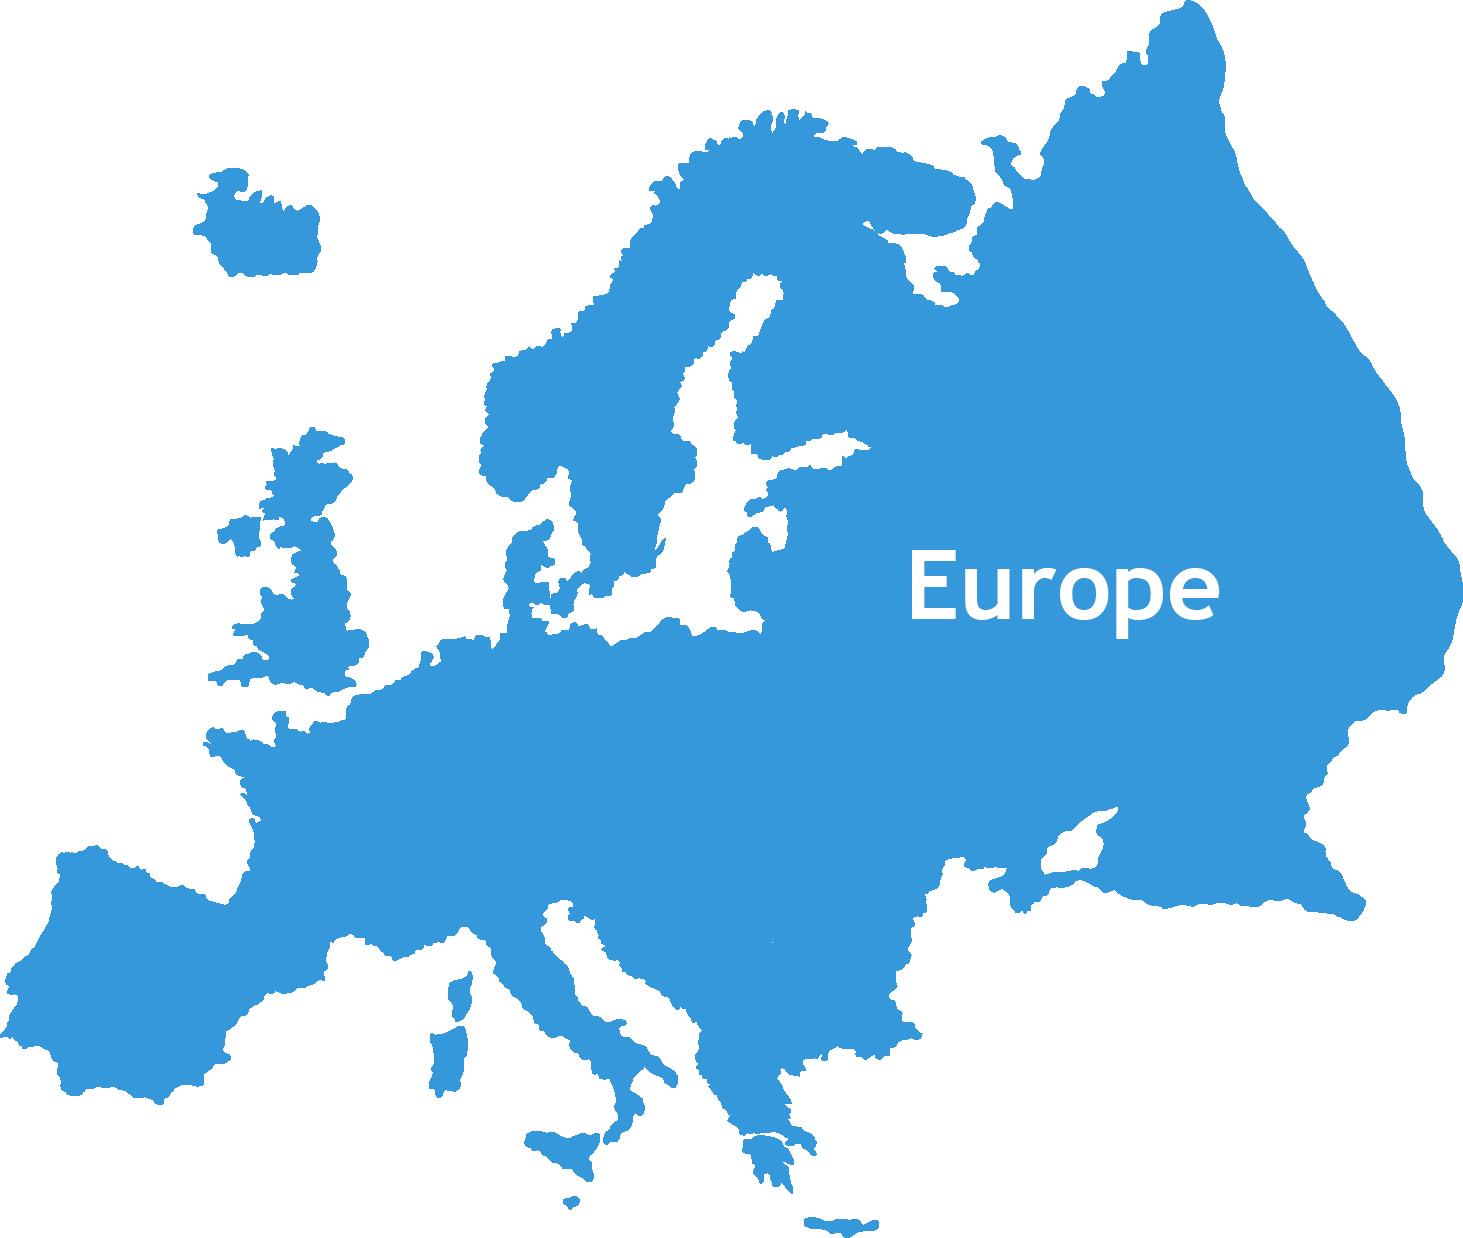 Europe area. Очертания Европы. Европа Континент. Европа материк. Континент Европа на карте.